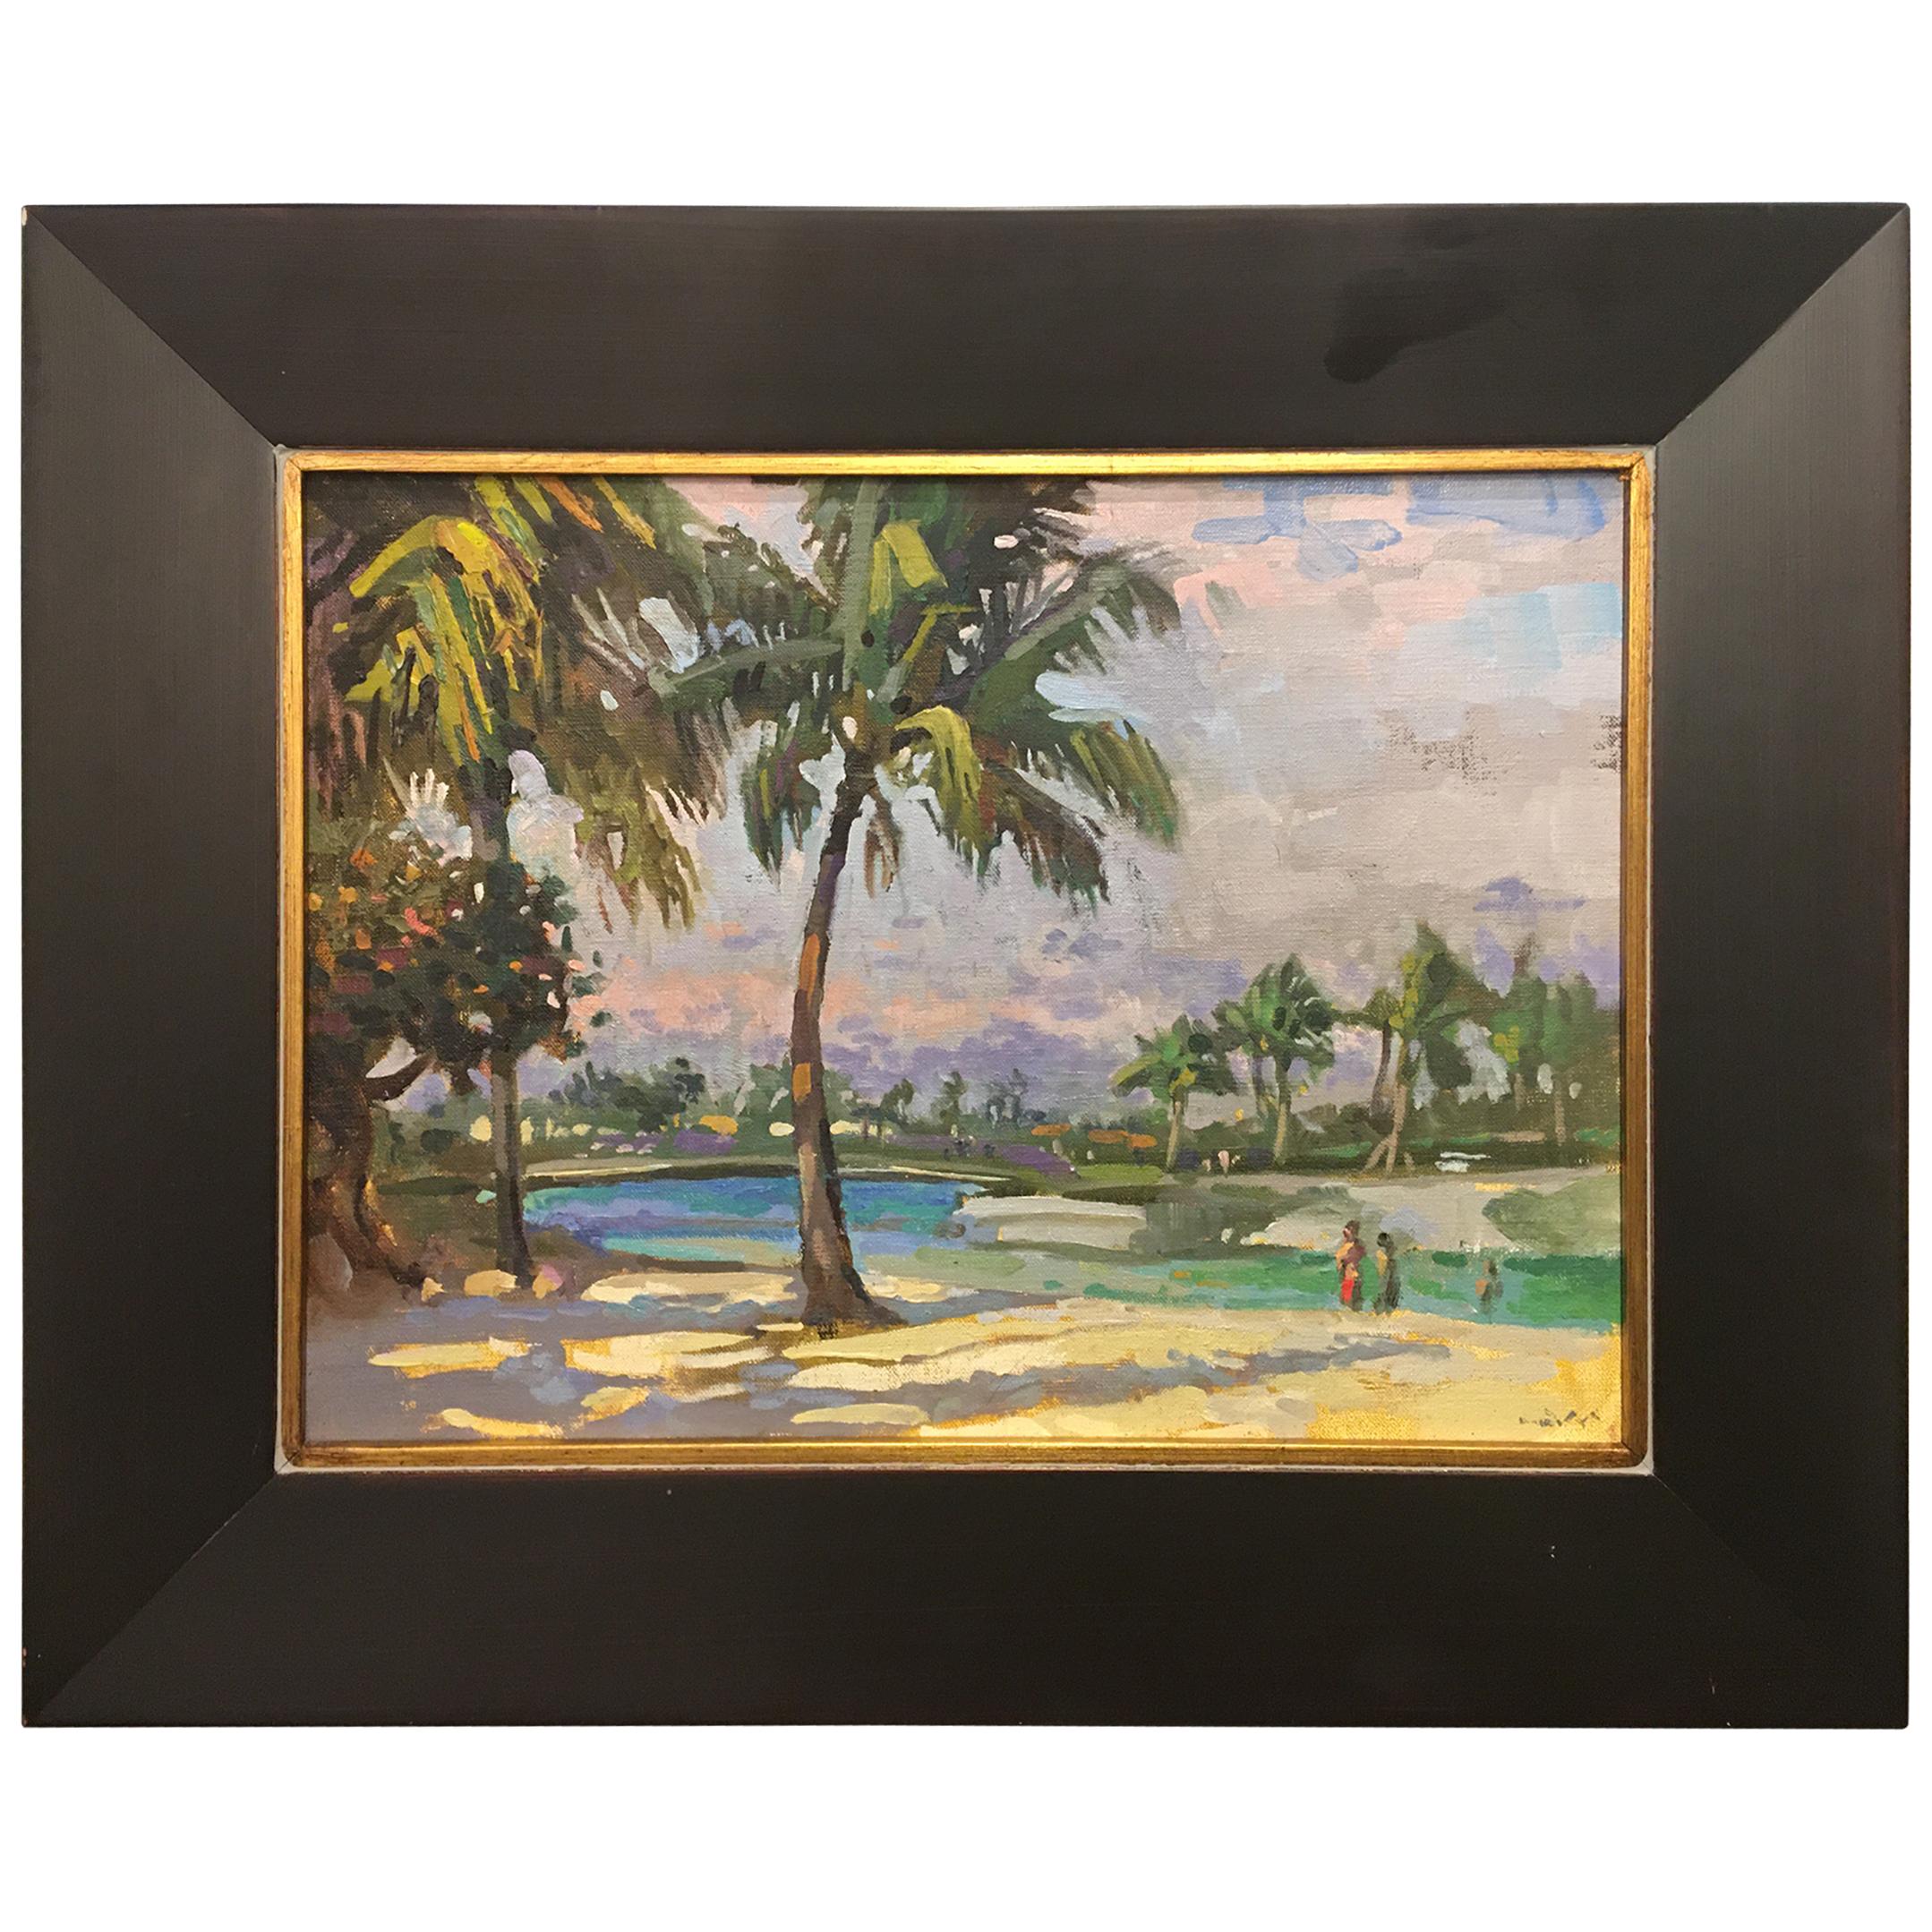 Framed Oil on Canvas "Dubois Light" Ocean and Palms Scene, Jeff Markowsky